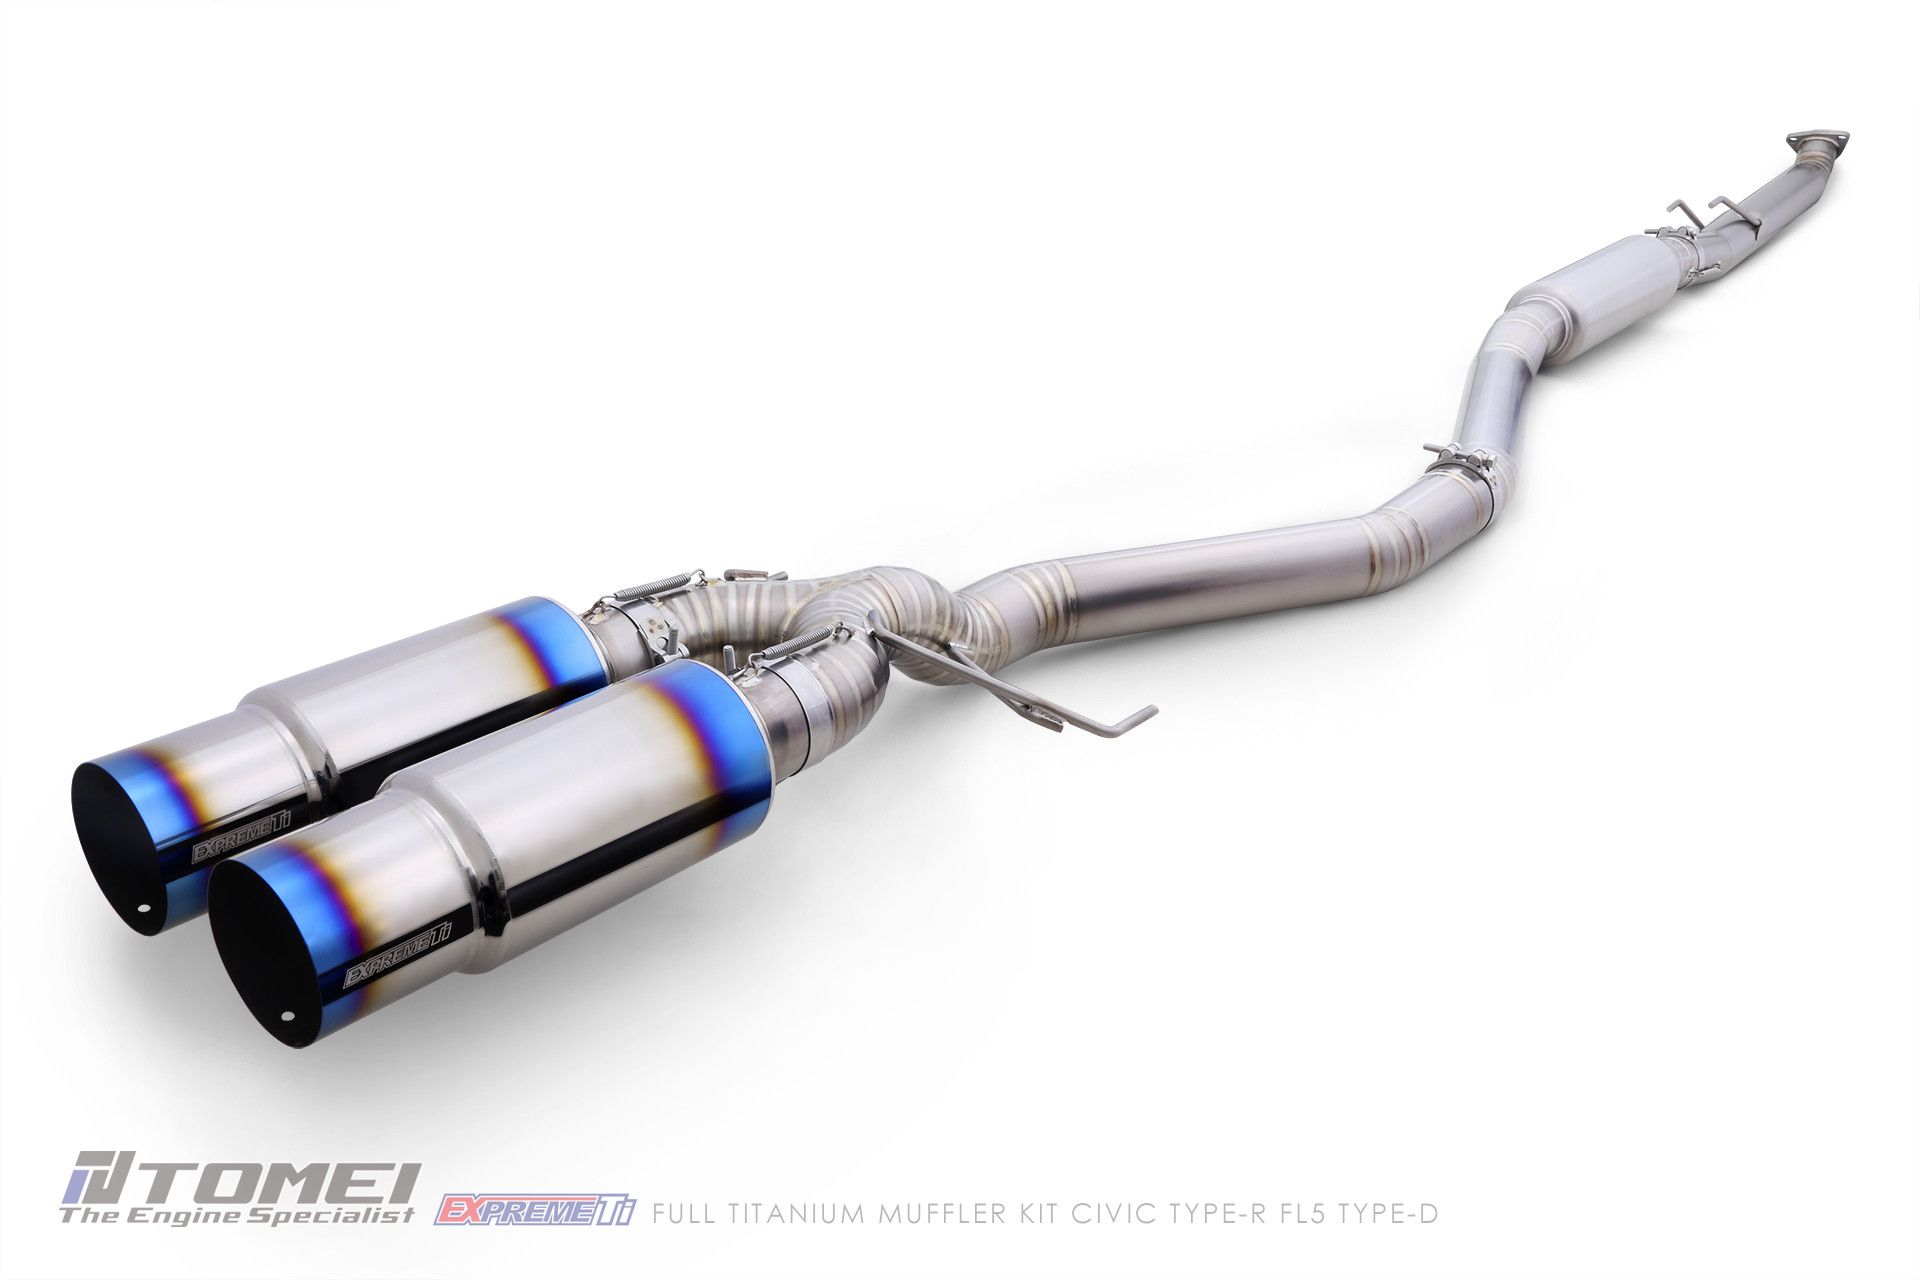 Tomei Full Titanium Muffler Kit, Type D - Honda Civic Type-R FL5